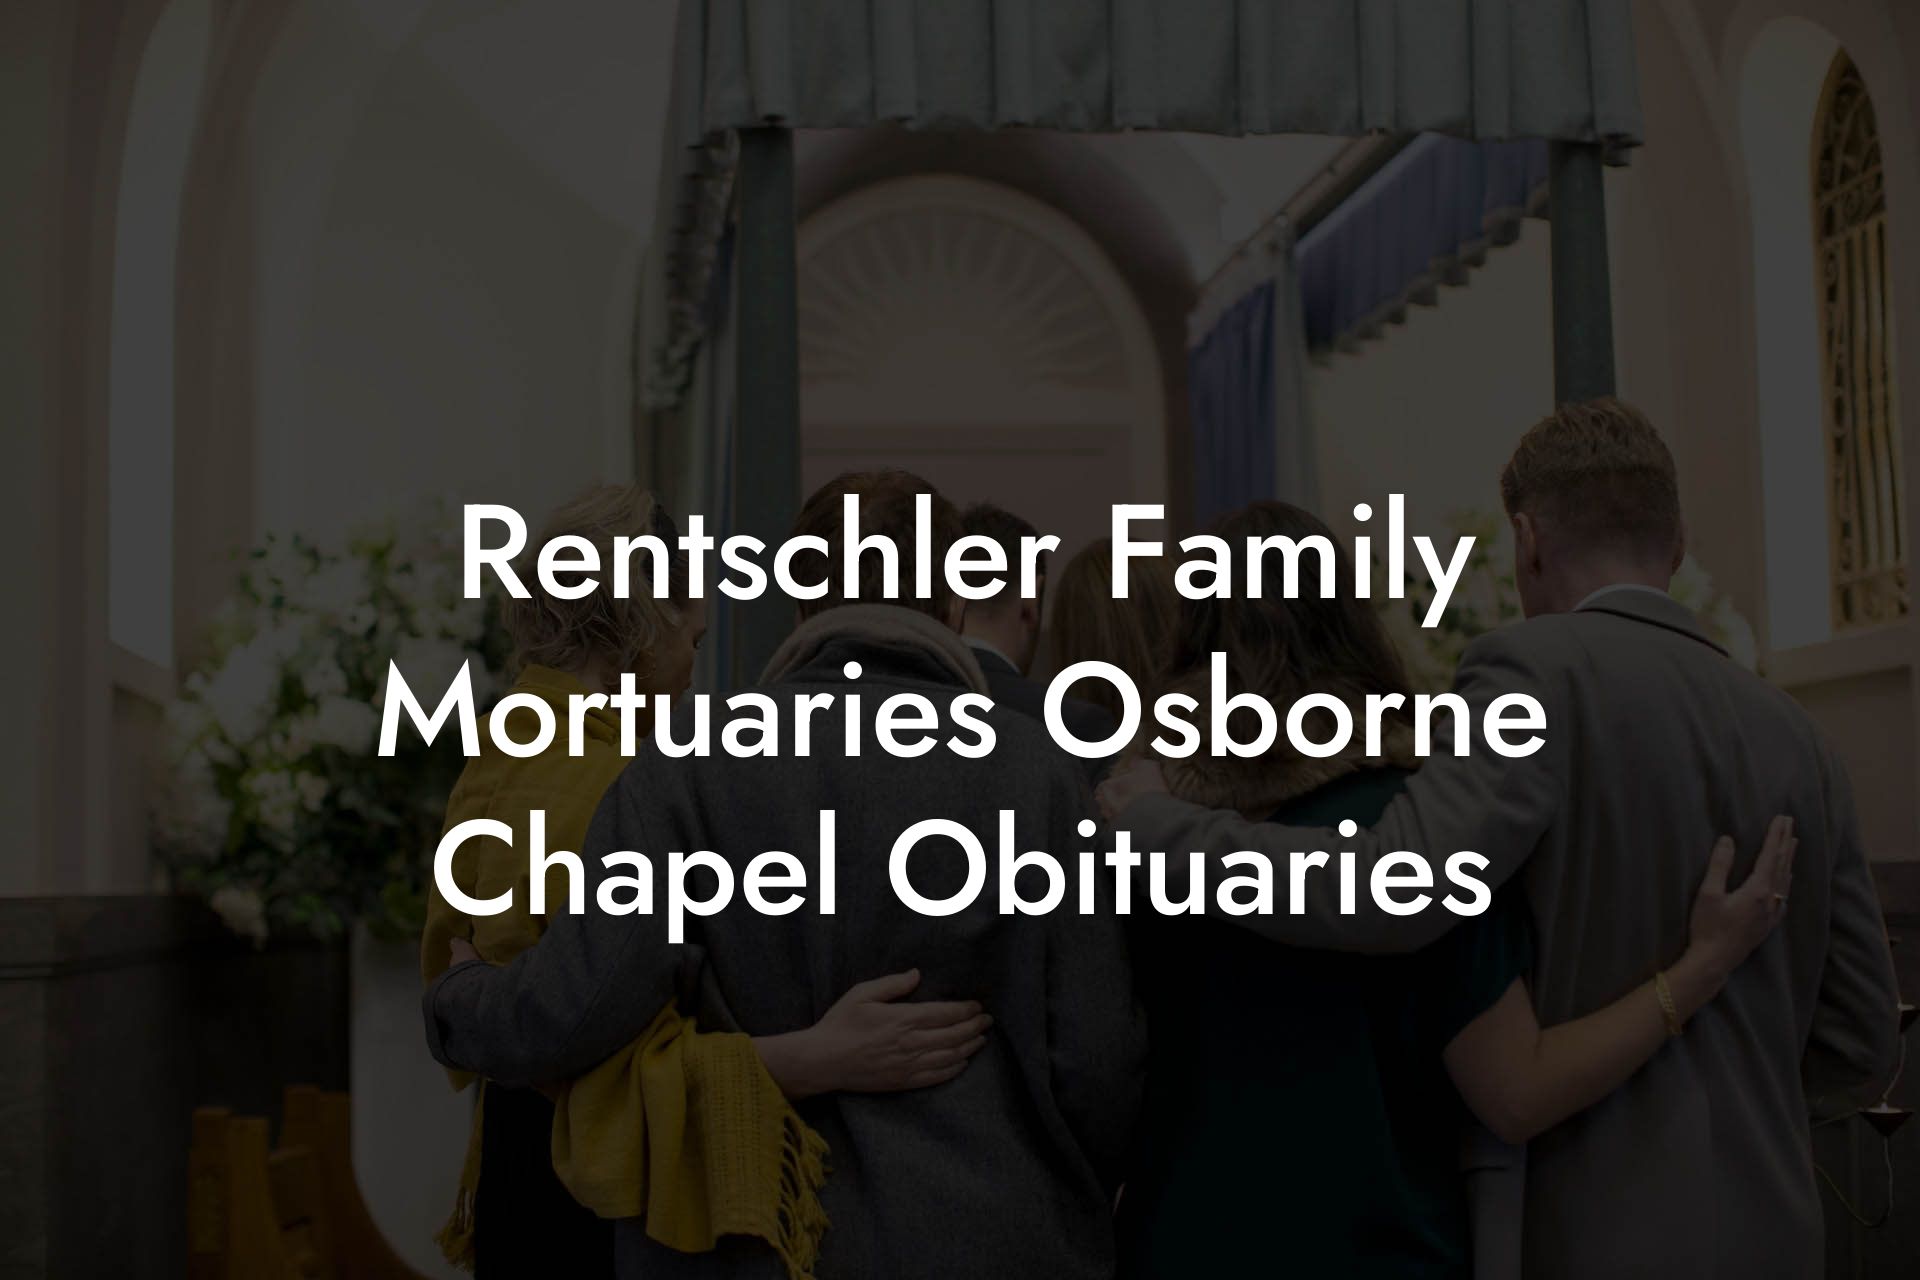 Rentschler Family Mortuaries Osborne Chapel Obituaries